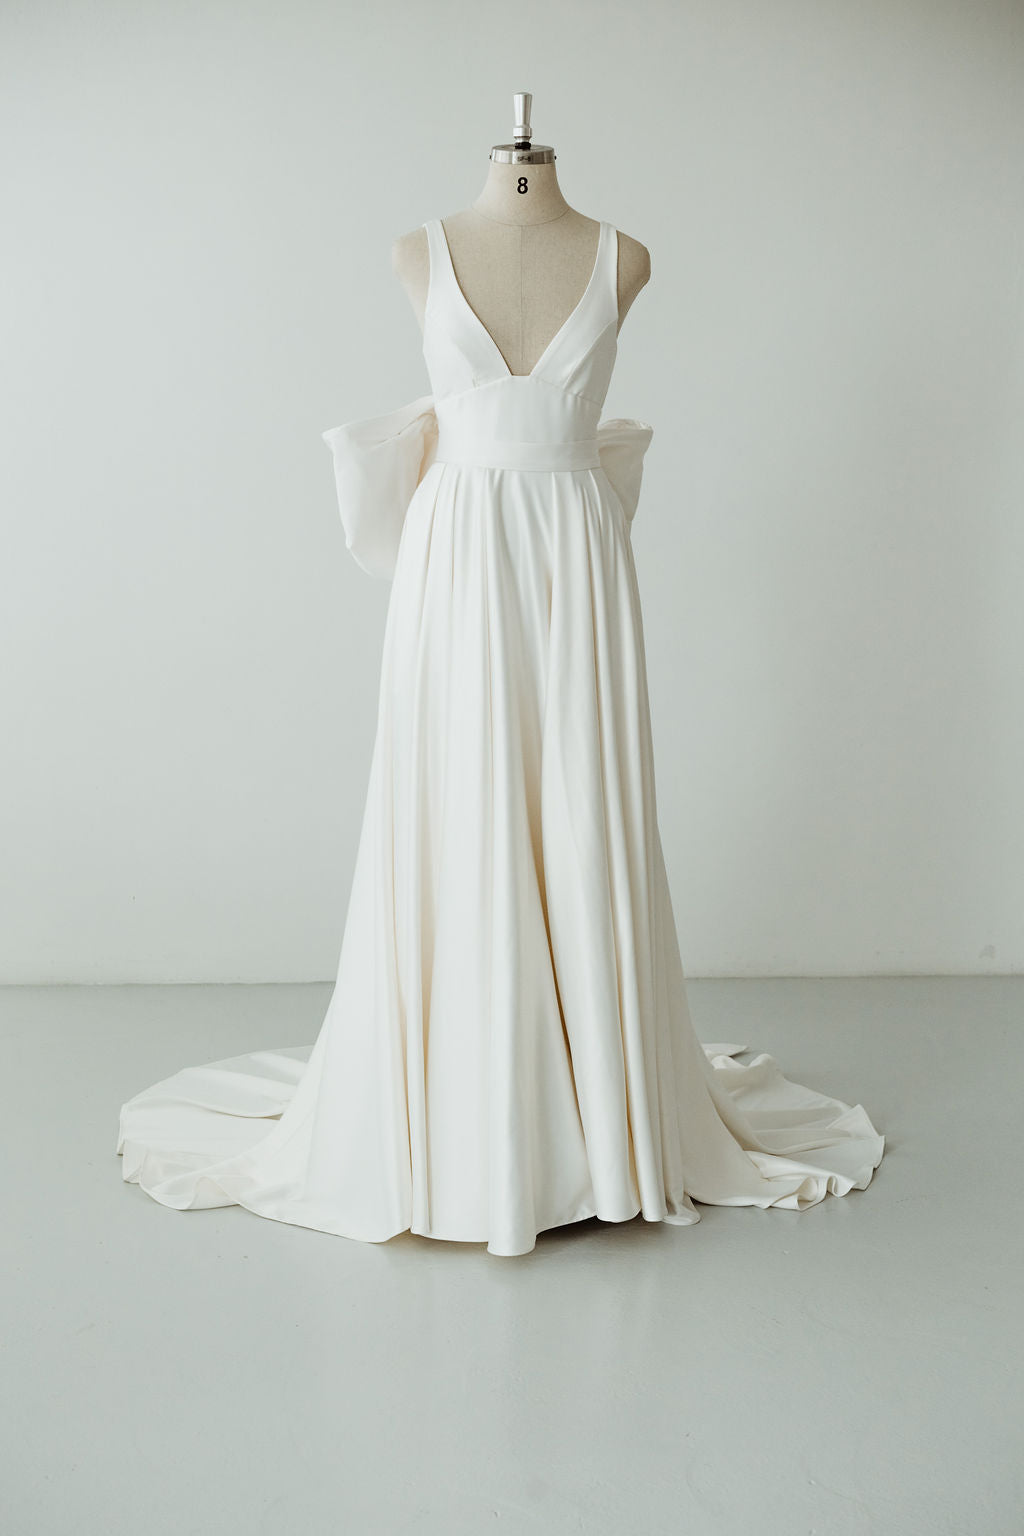 Unruly Bow | Dress | Sadie Bosworth Atelier